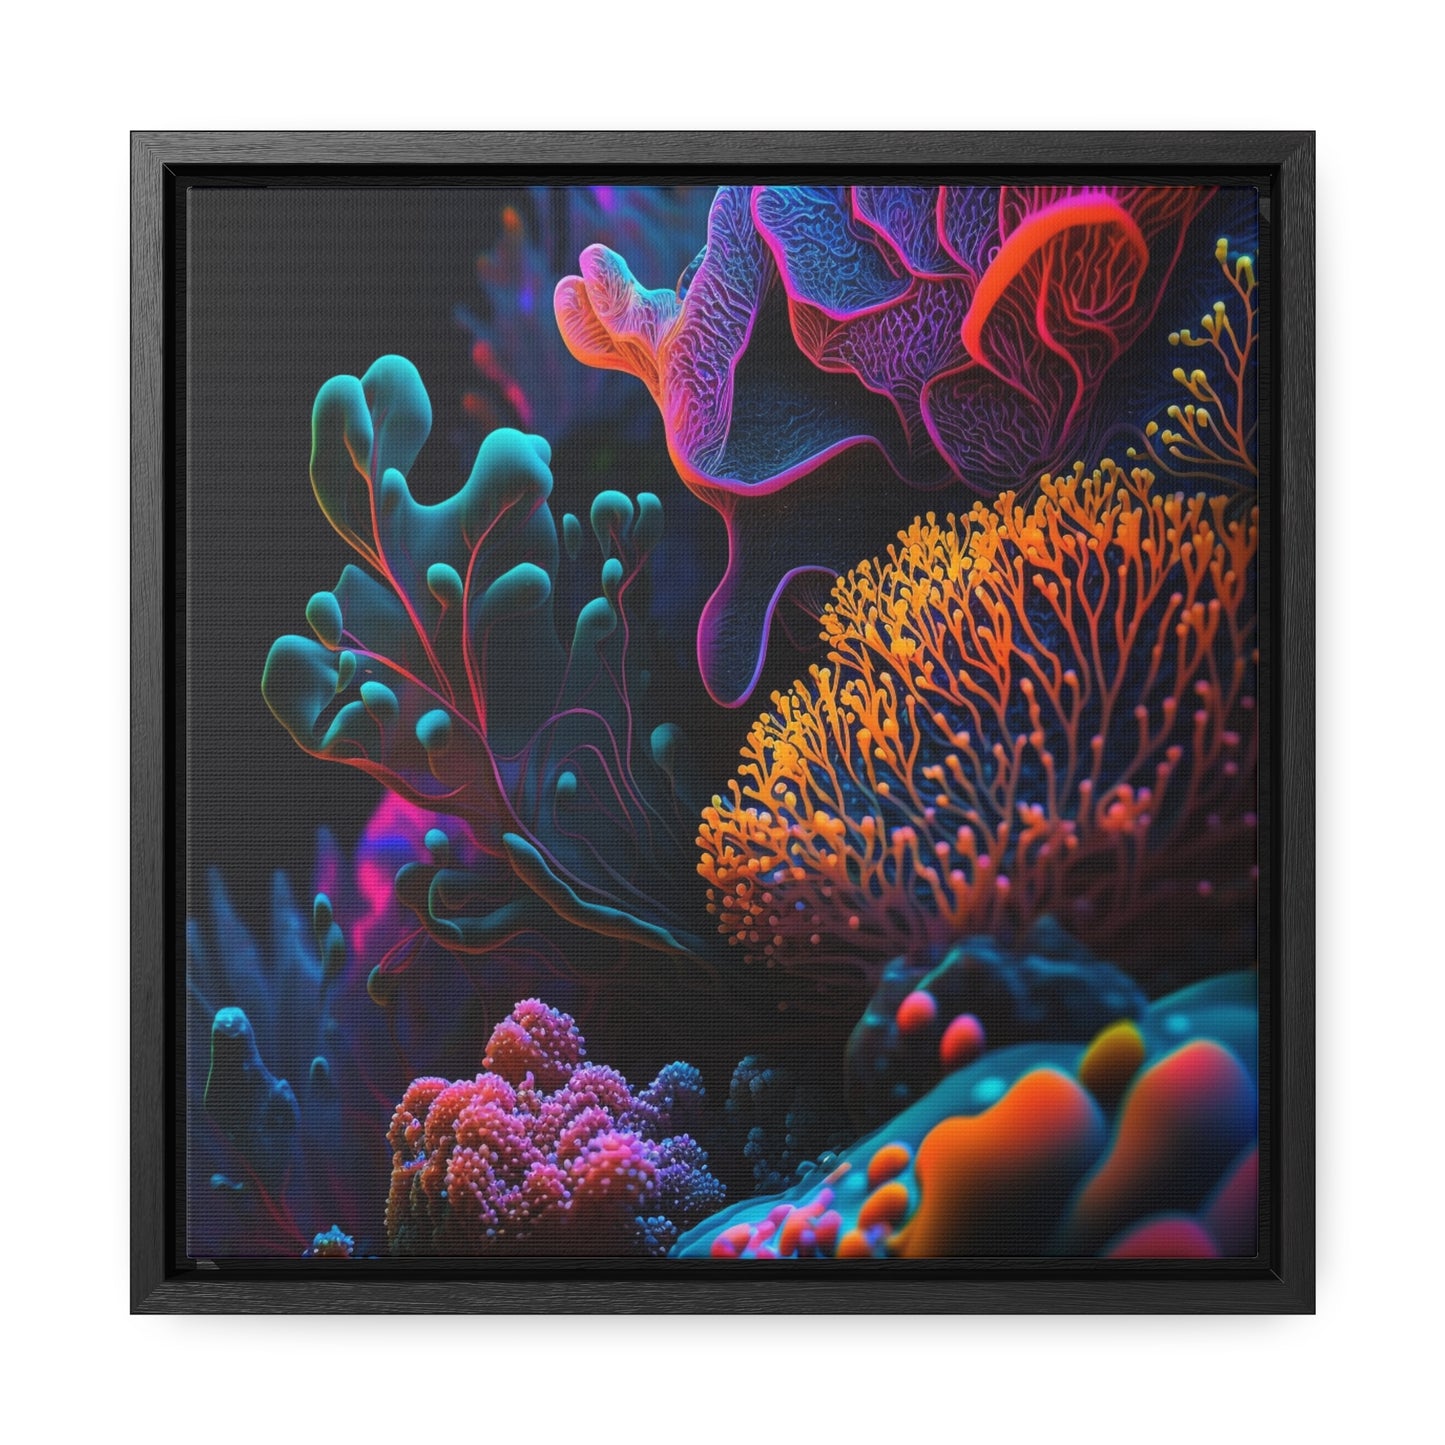 Gallery Canvas Wraps, Square Frame Ocean Life Macro 2